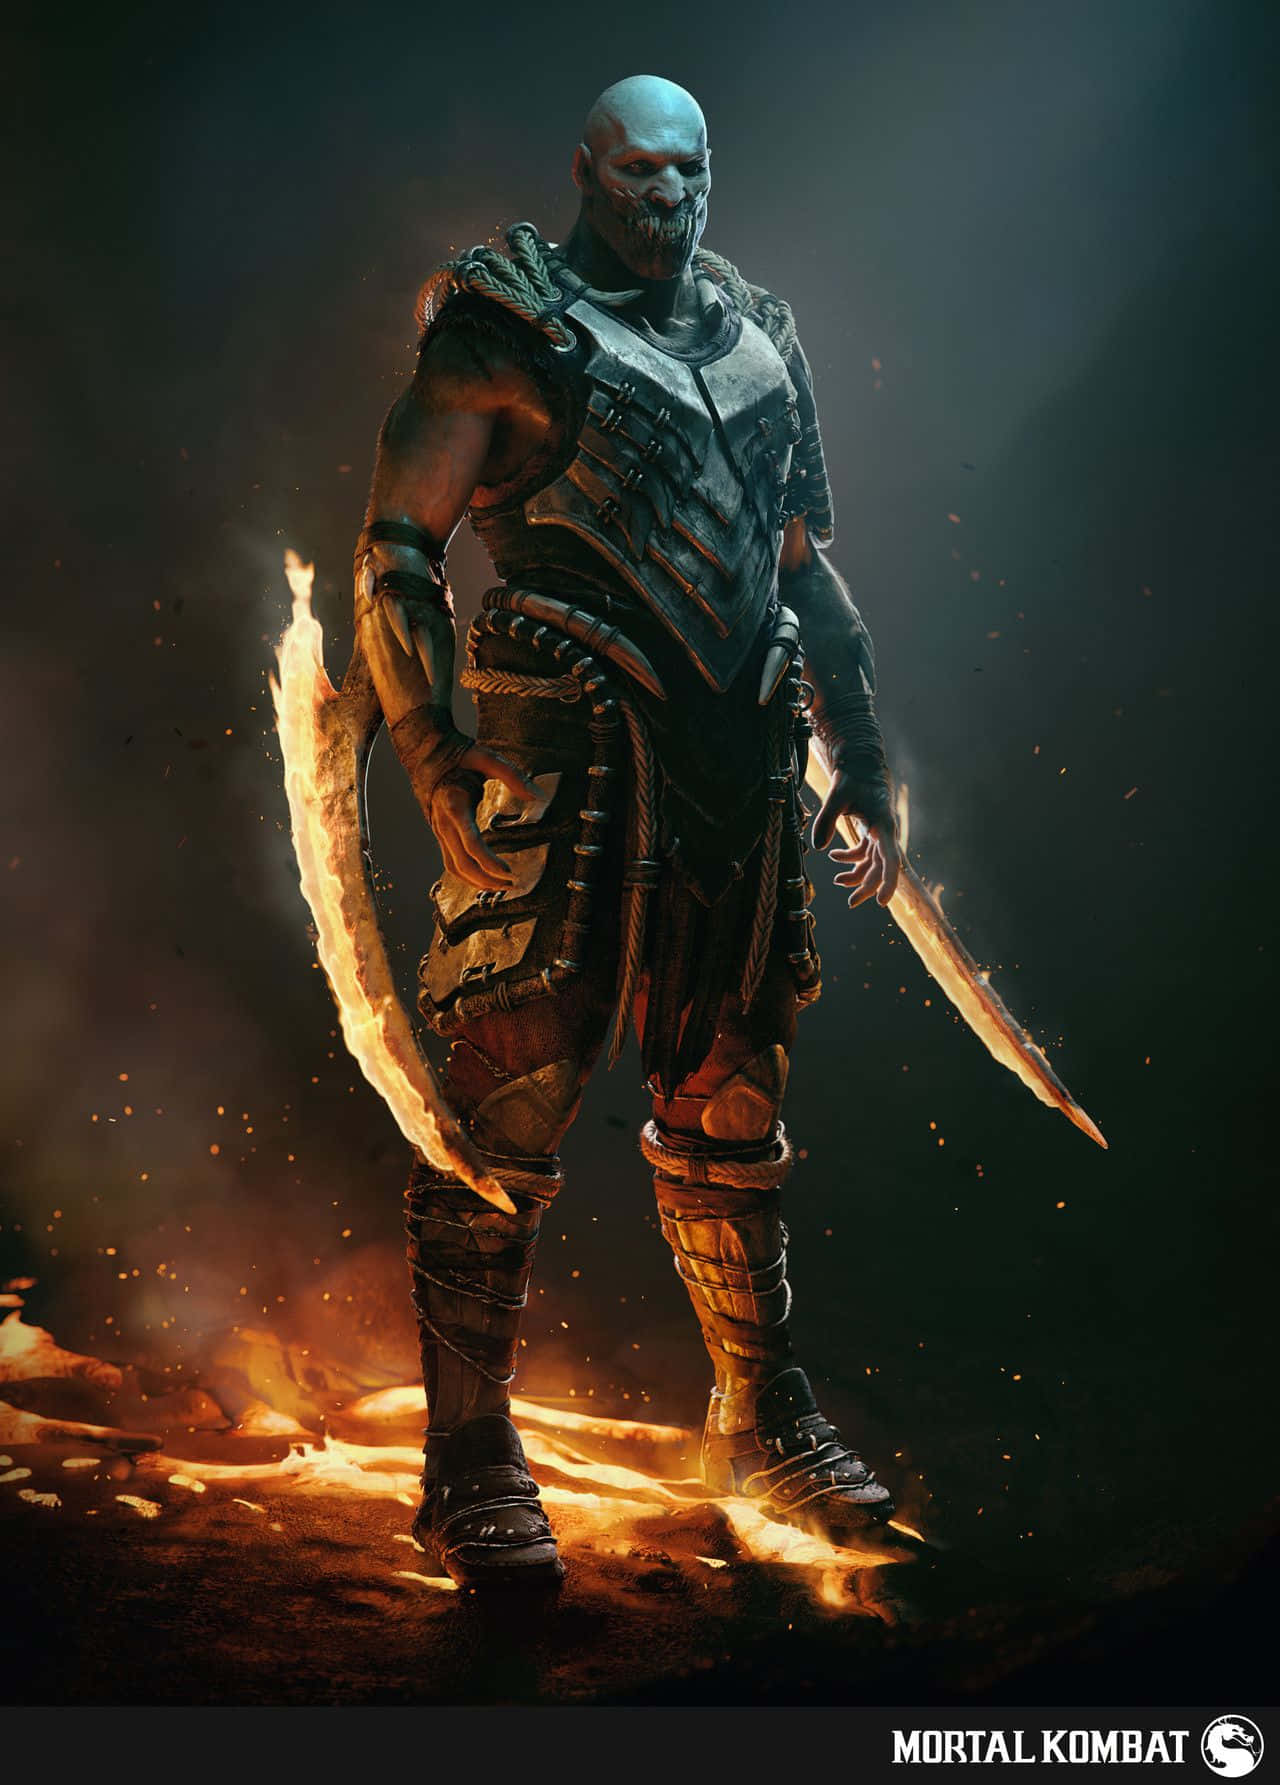 Mortal Kombat's Fierce Tarkatan Warrior, Baraka Wallpaper